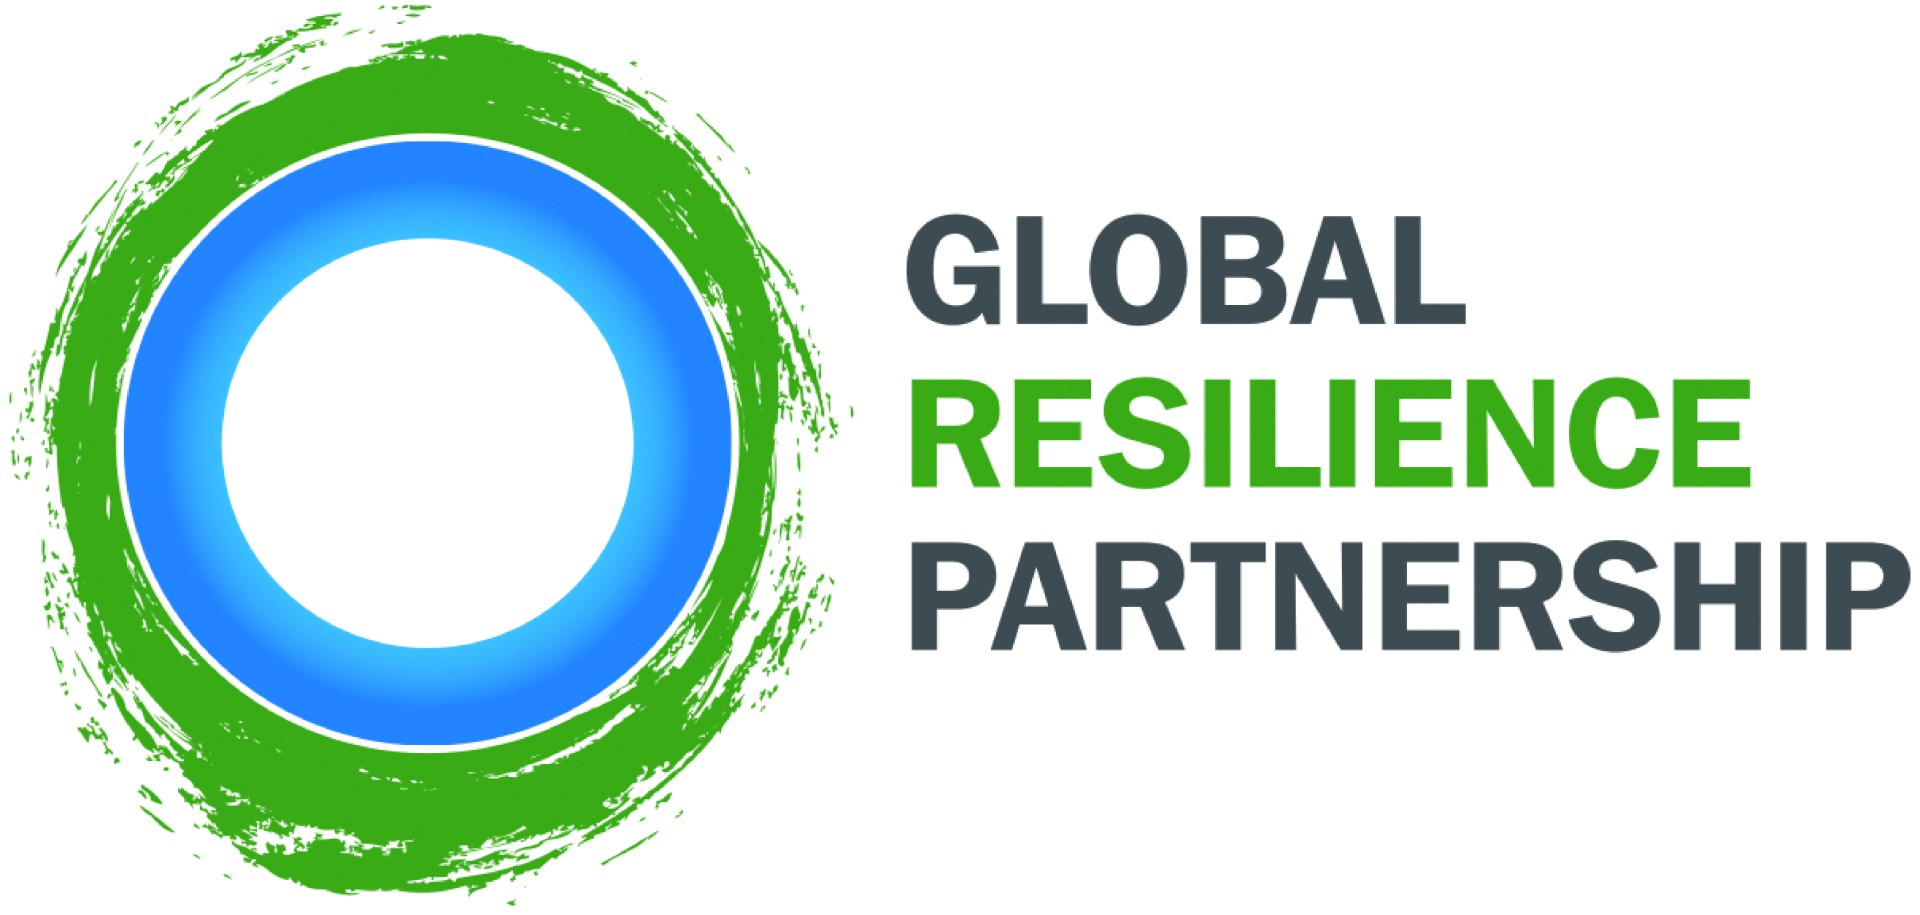 Global Resilience Partnership (GRP)